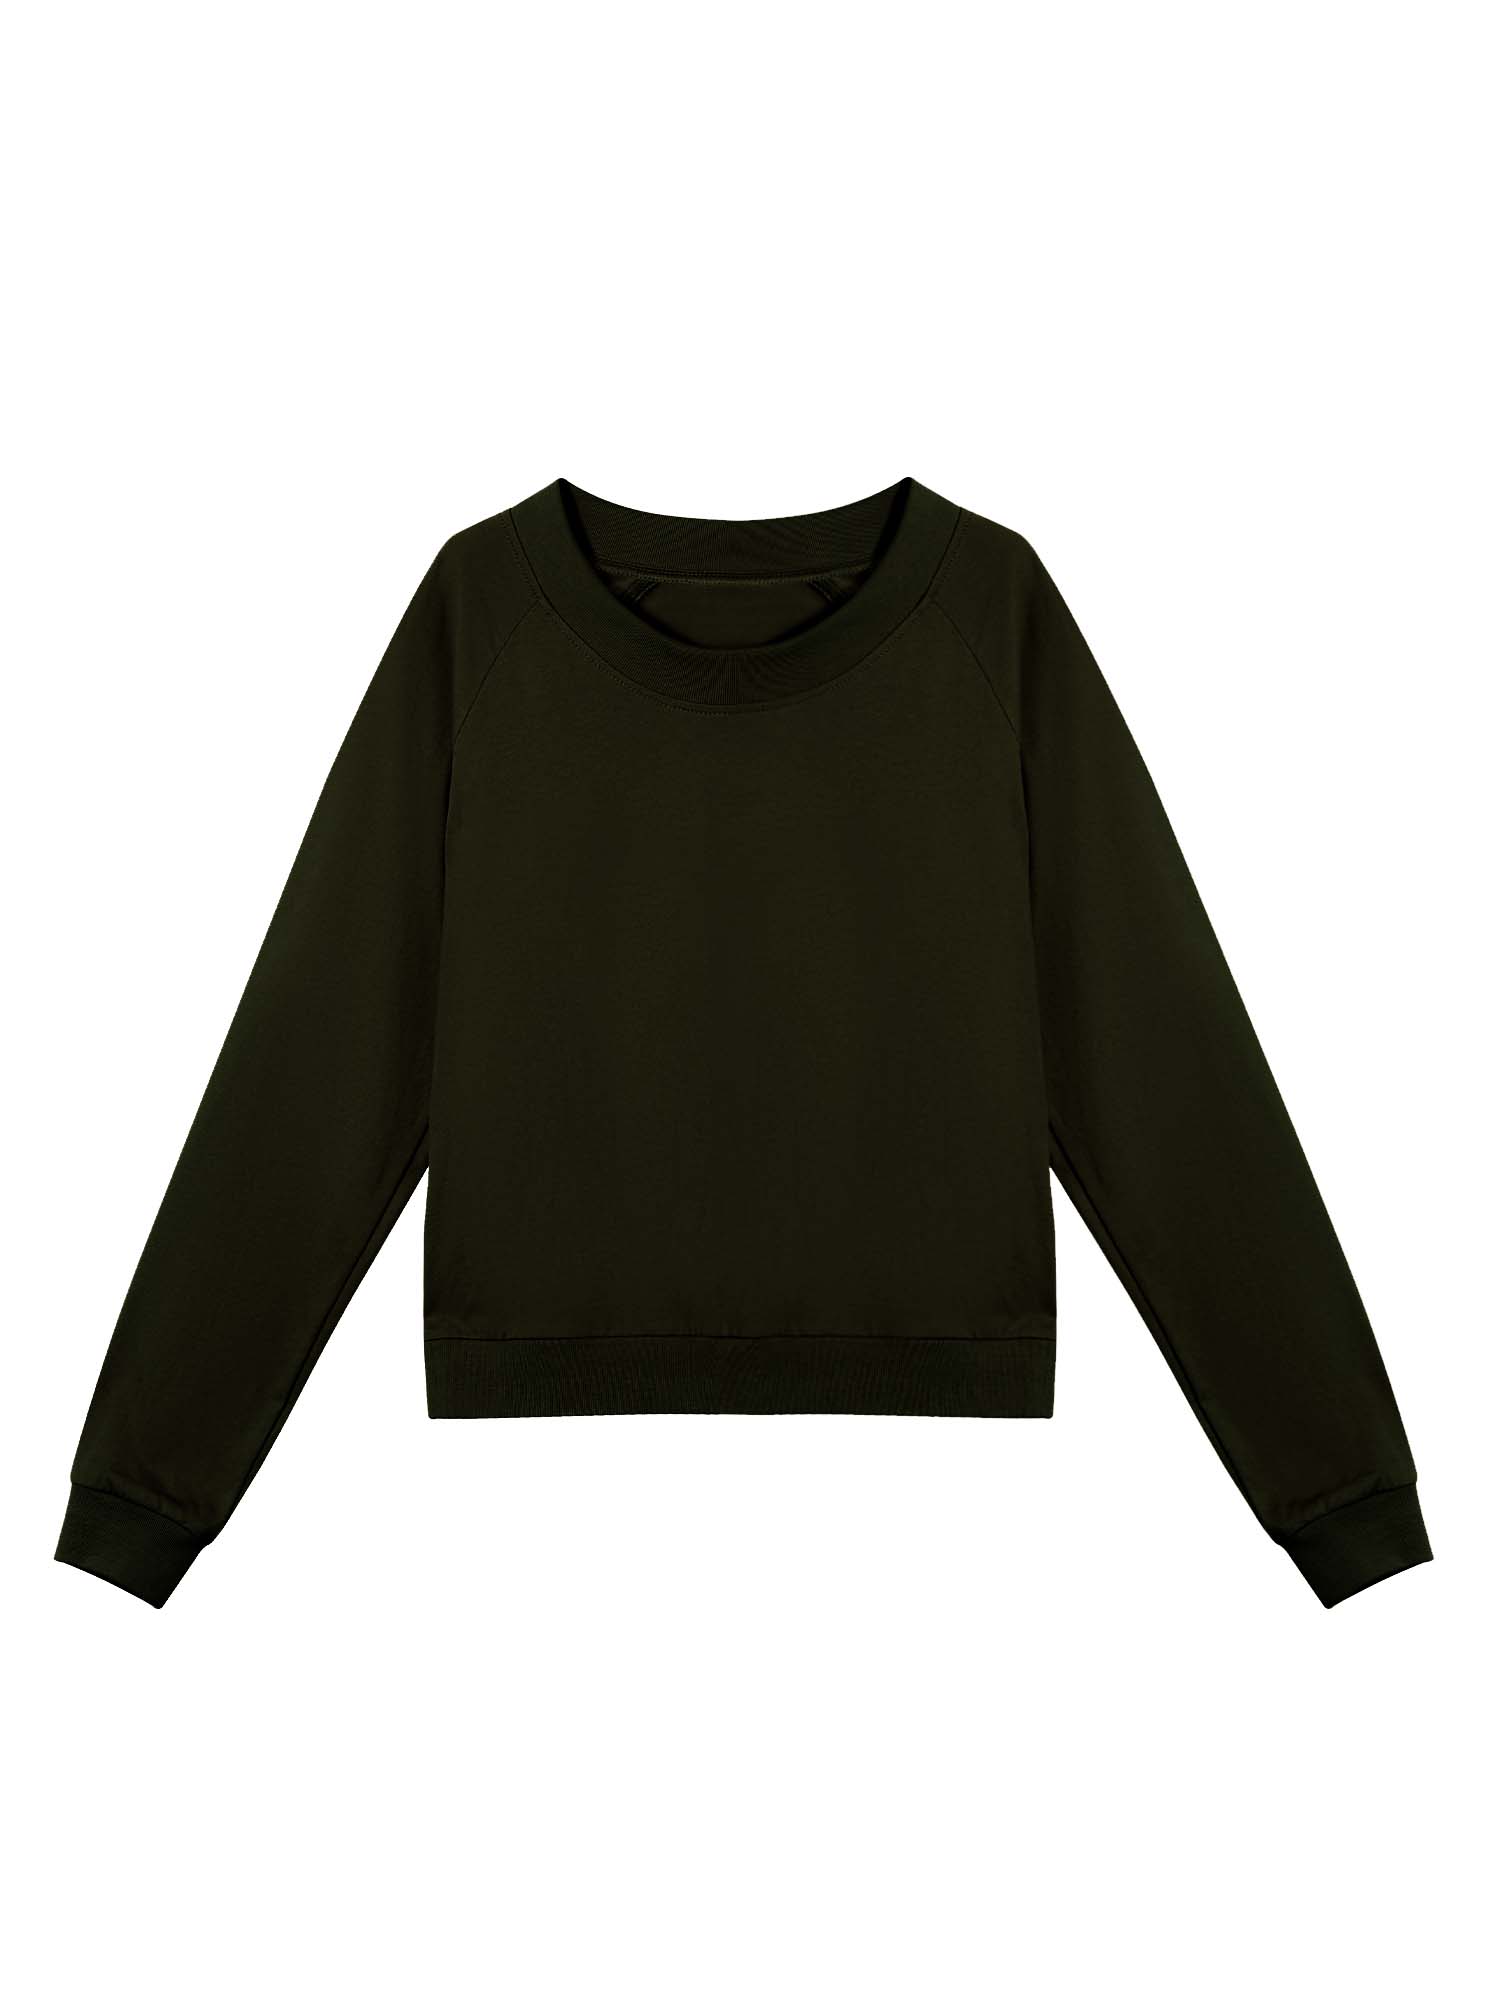 Raglan Sleeve Crewneck Sweater